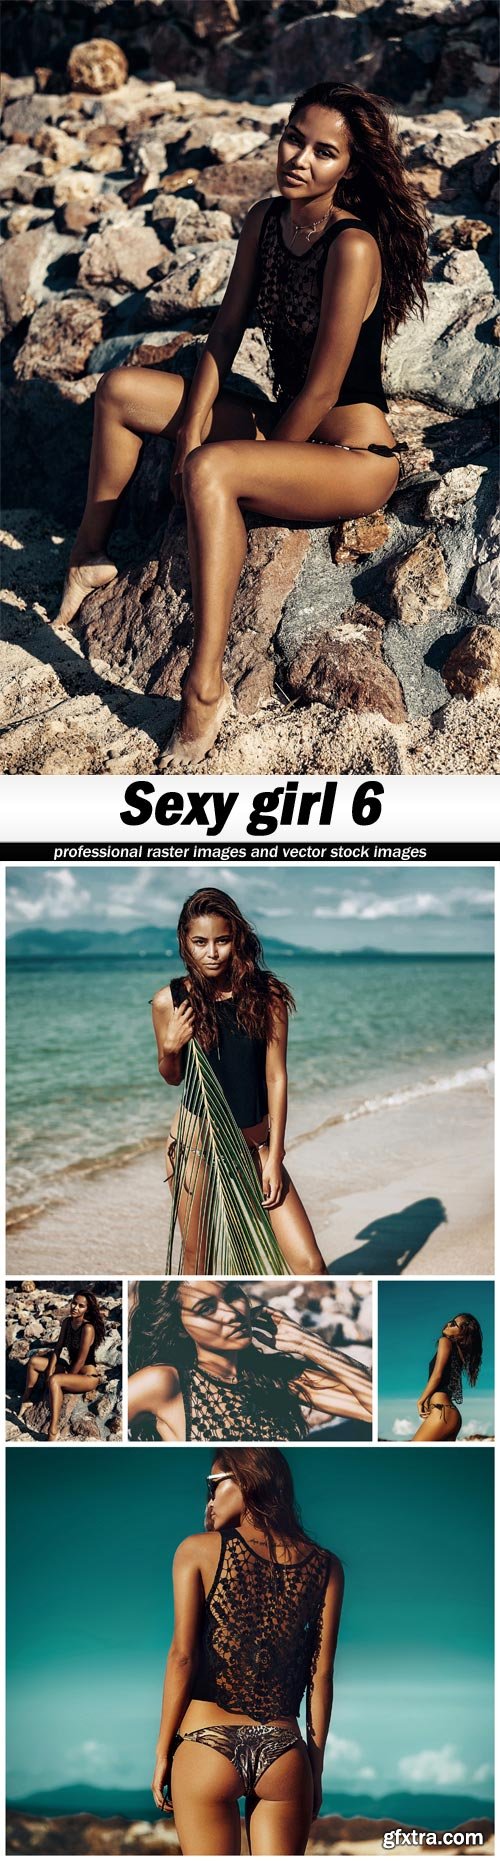 Sexy girl 6 - 5 UHQ JPEG